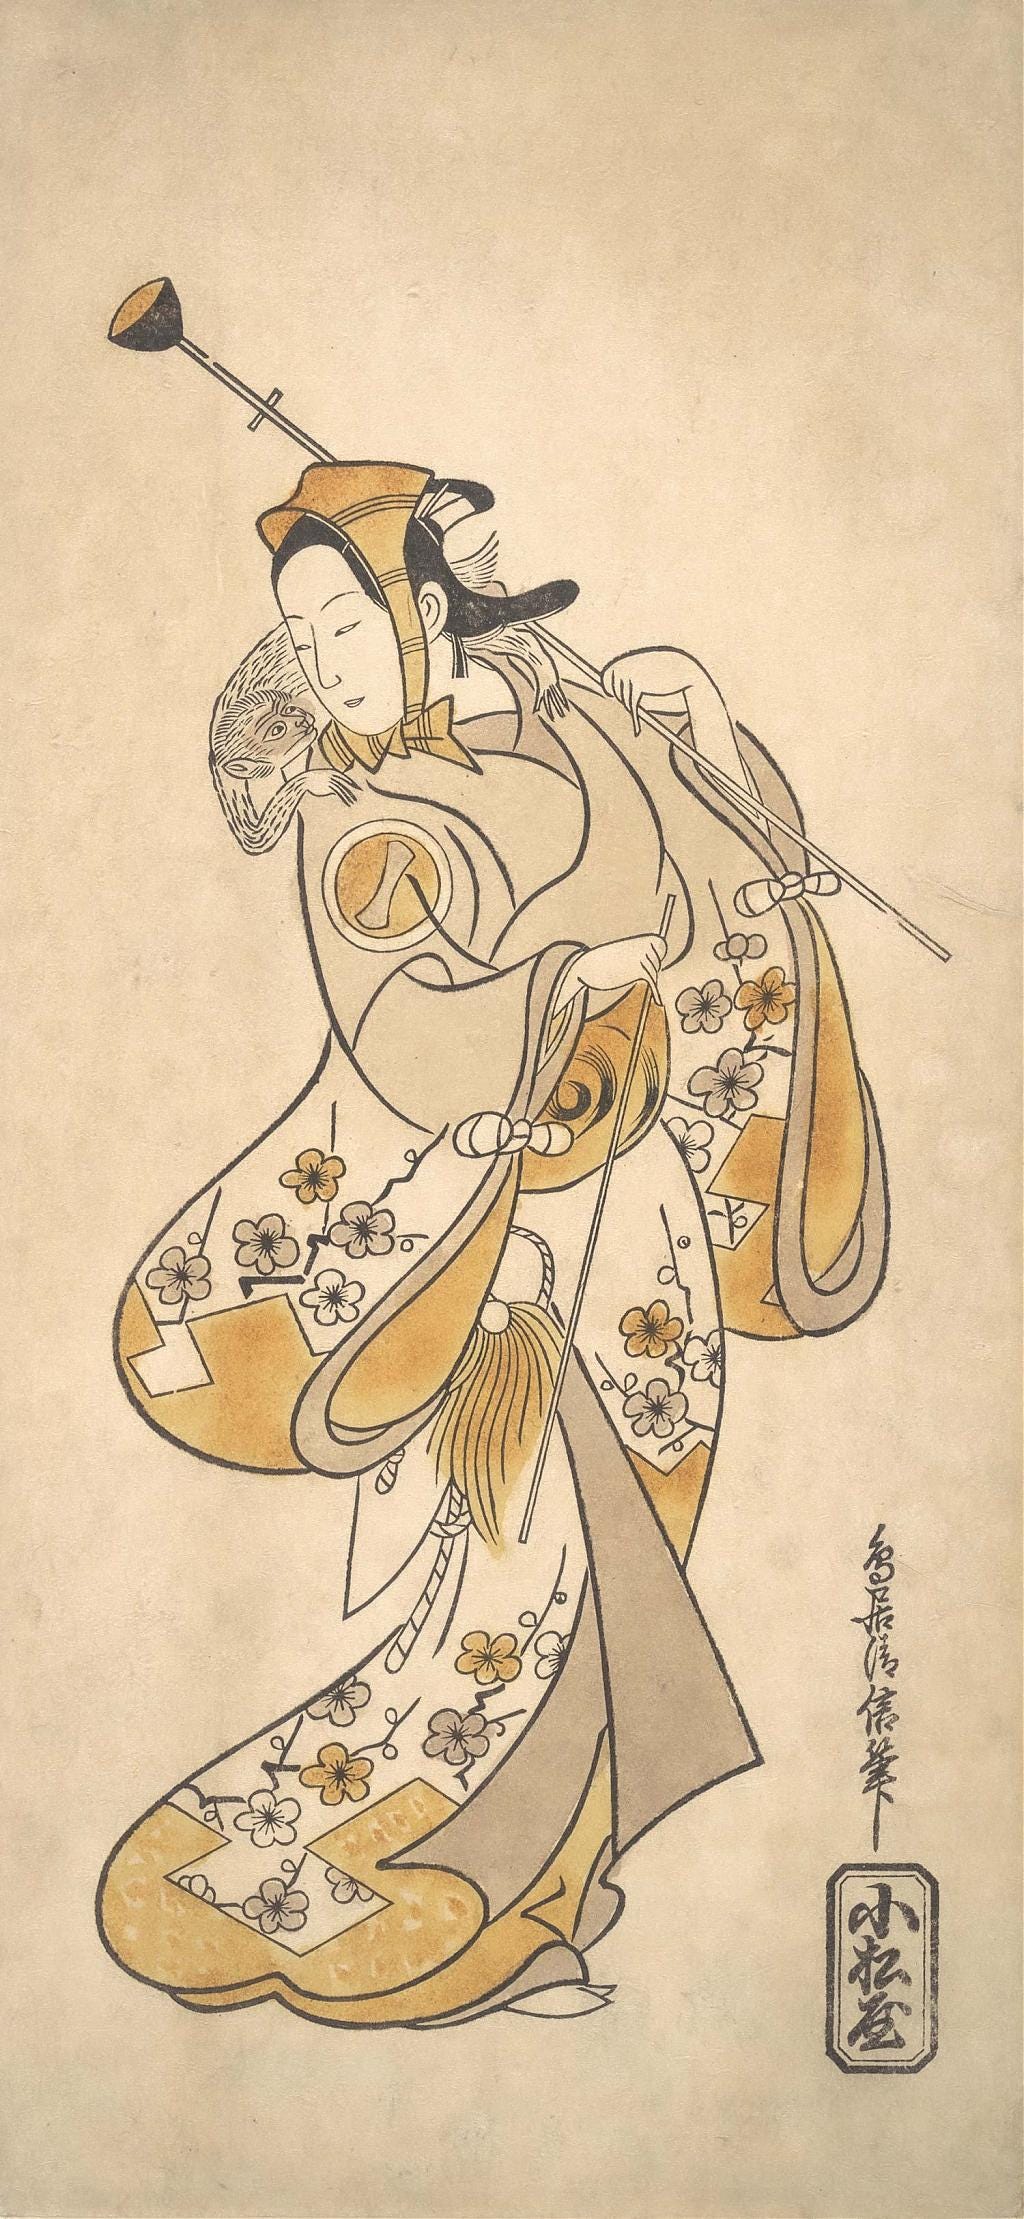 Woodblock print of Japanese kabuki actor Ichikawa Monnosuke as a sarumawashi monkey trainer